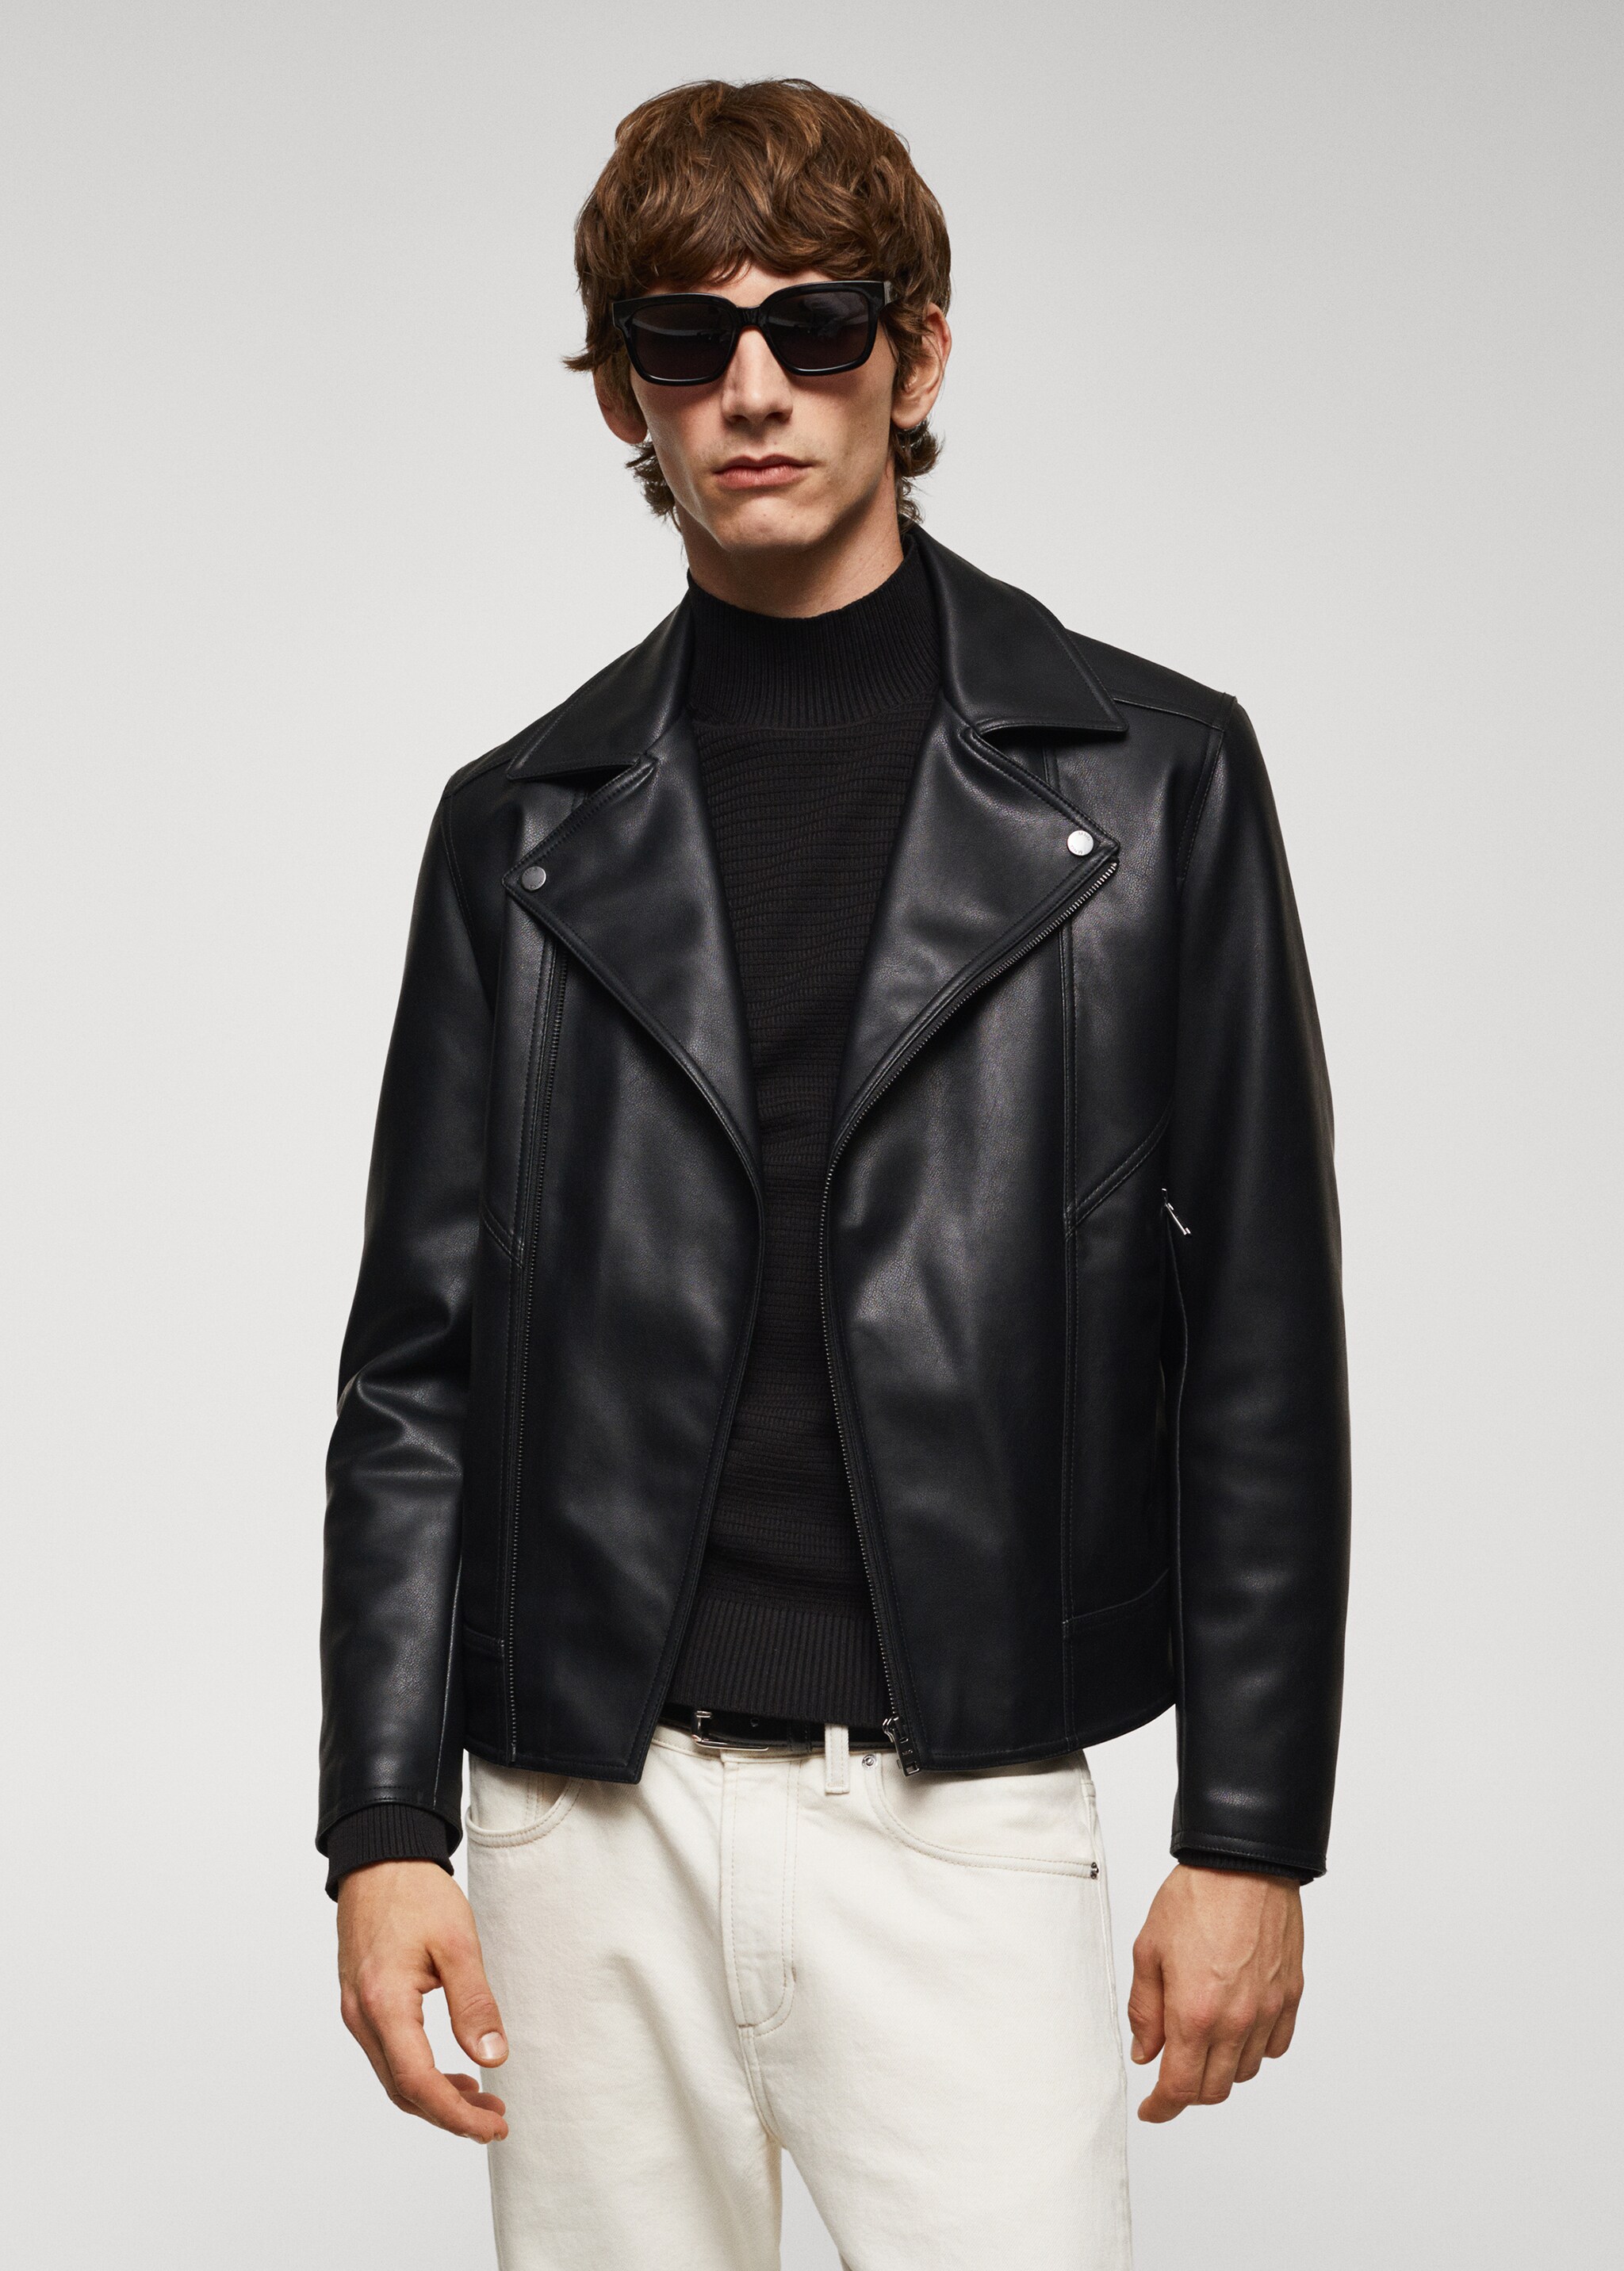 Perfect leather-effect jacket - Medium plane